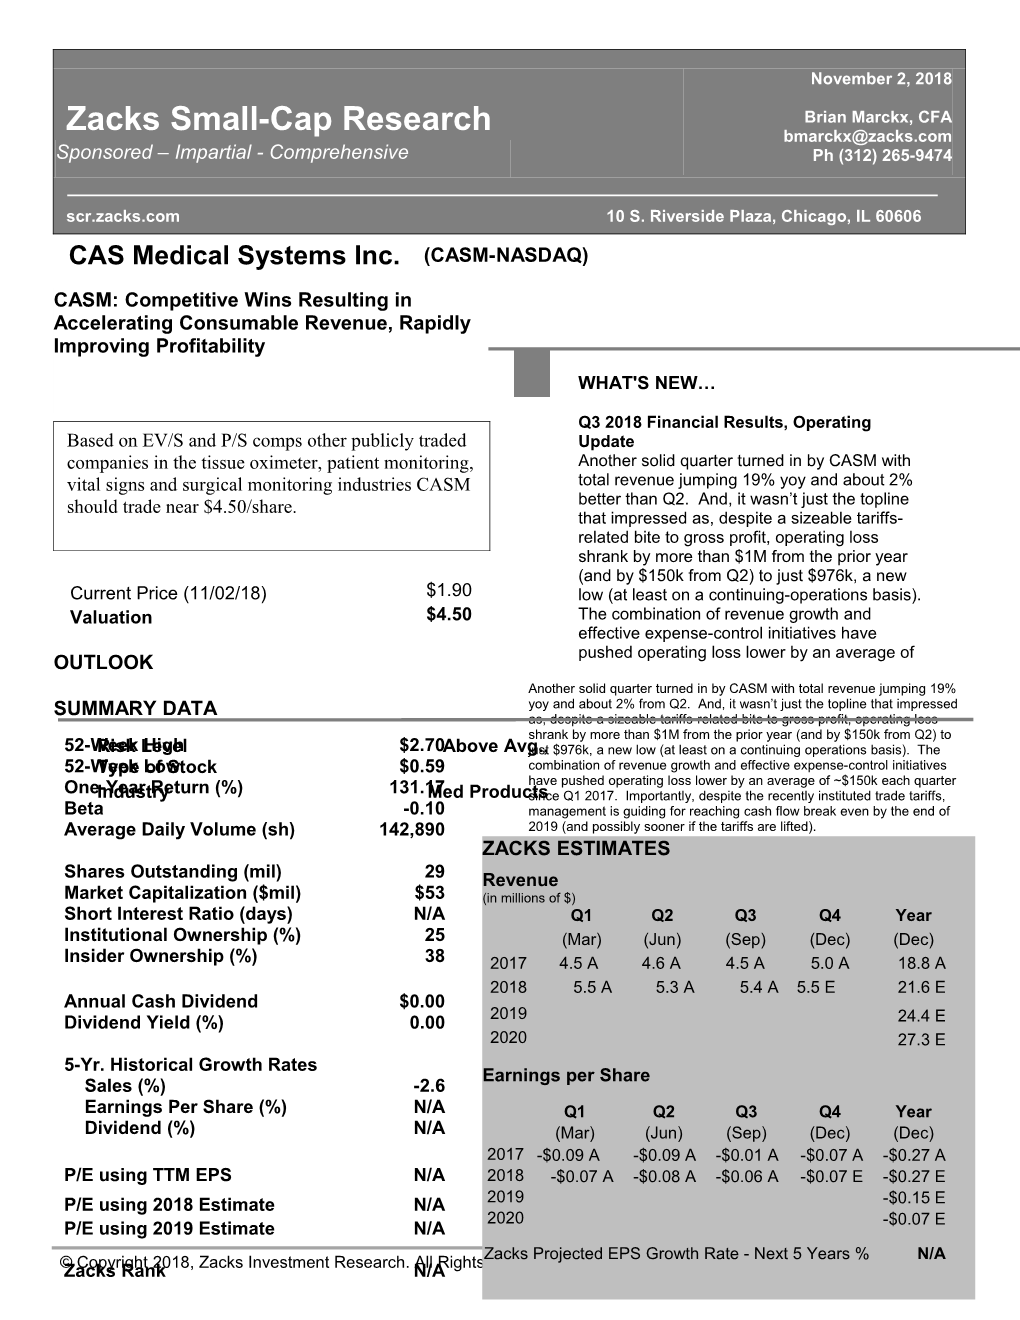 CAS Medical Systems Inc